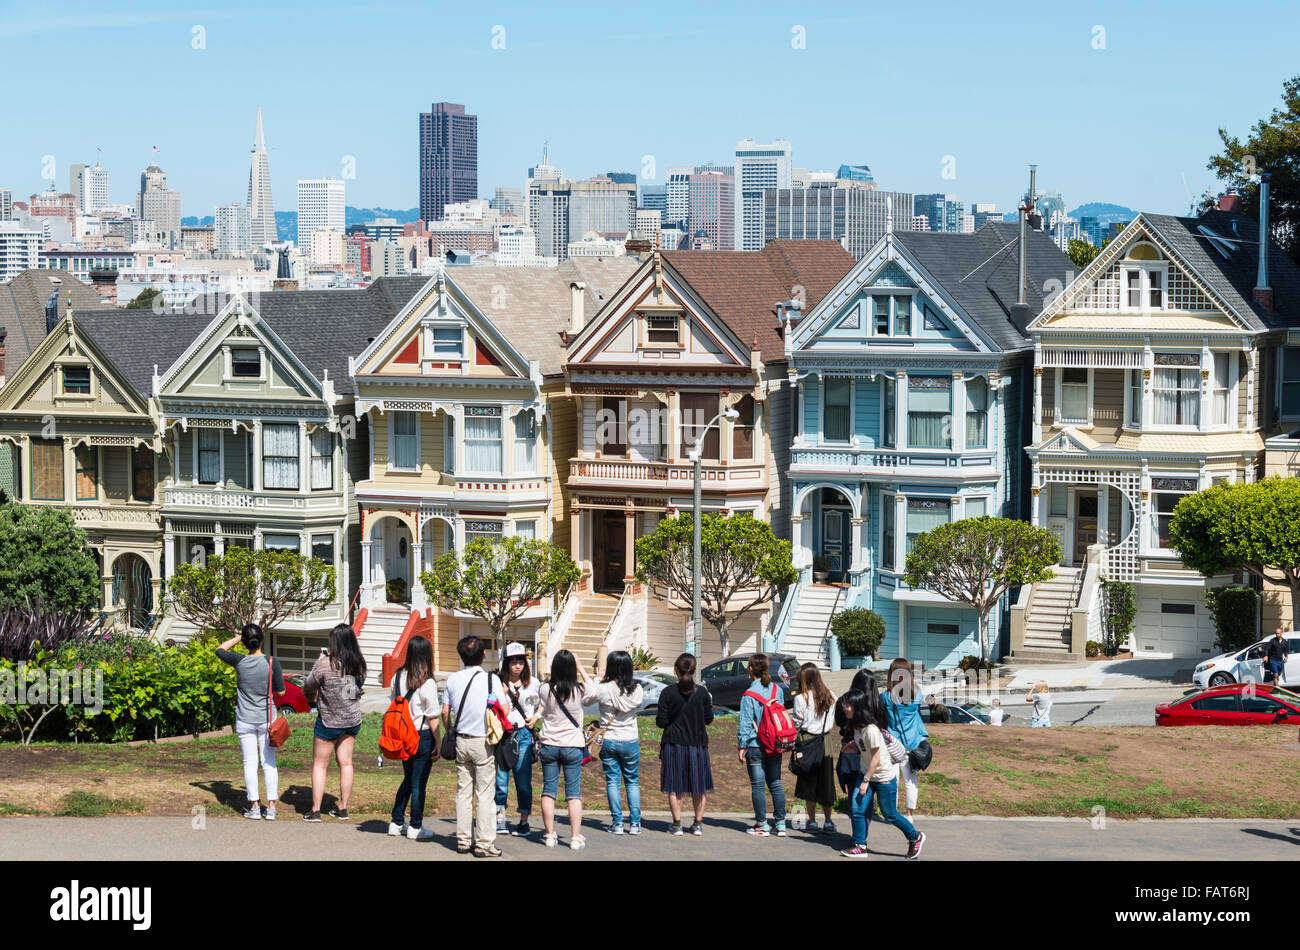 Tourists, Victorian row of houses, Painted Ladies, Postcard Row, Alamo Square, Steiner Street, San Francisco, California, USA Stock Photo